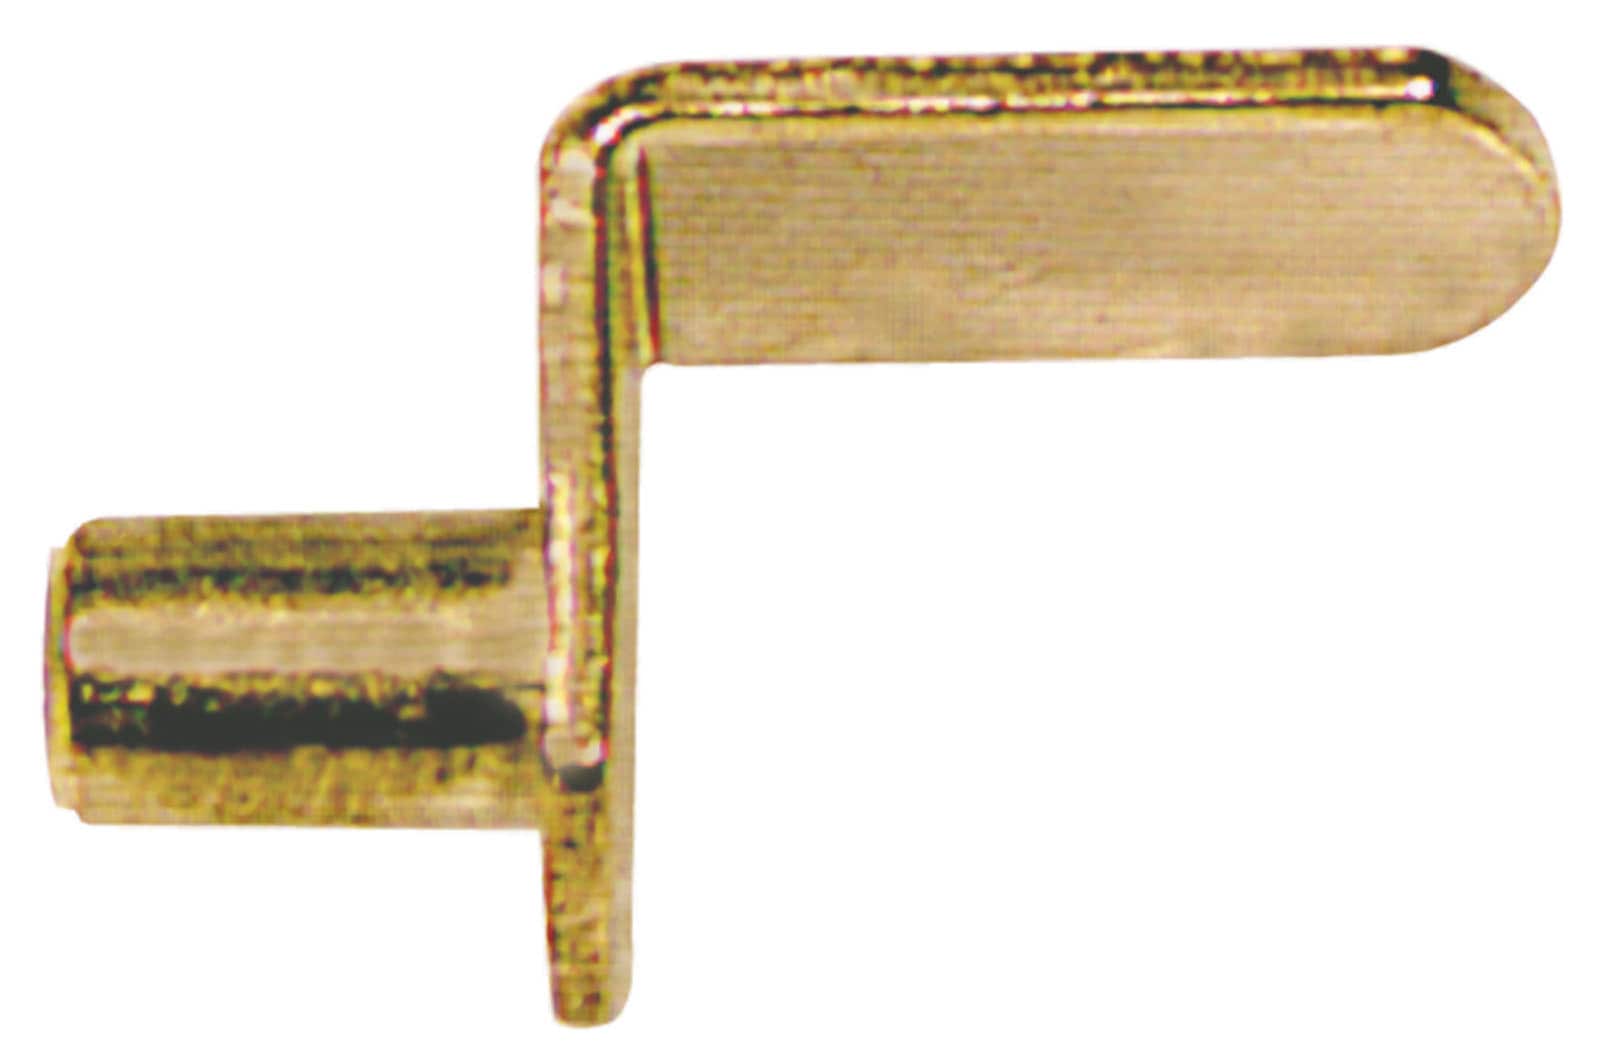 Bulldog Hardware 1/4 in. Angled Shelf Pin, Brass Plated, 4 Pack